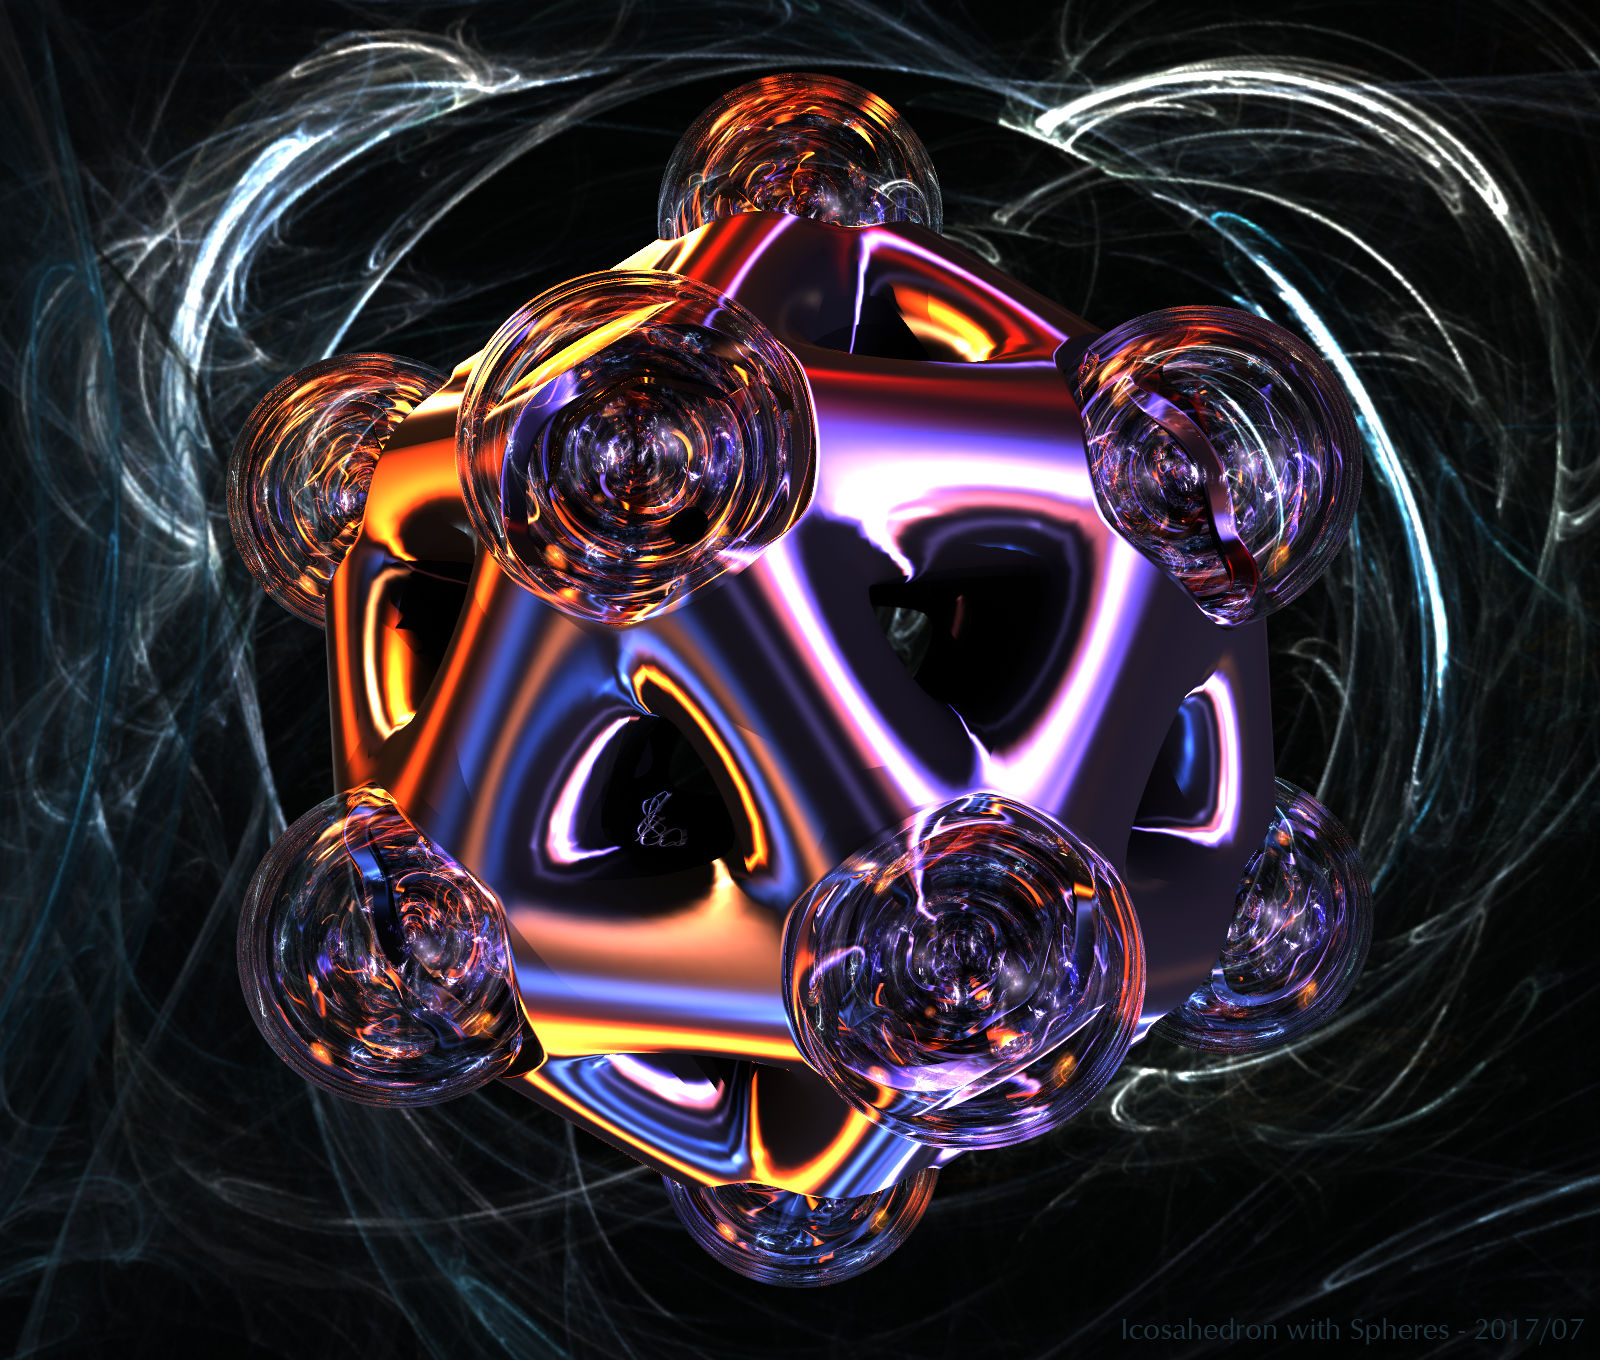 Icosahedron with Spheres